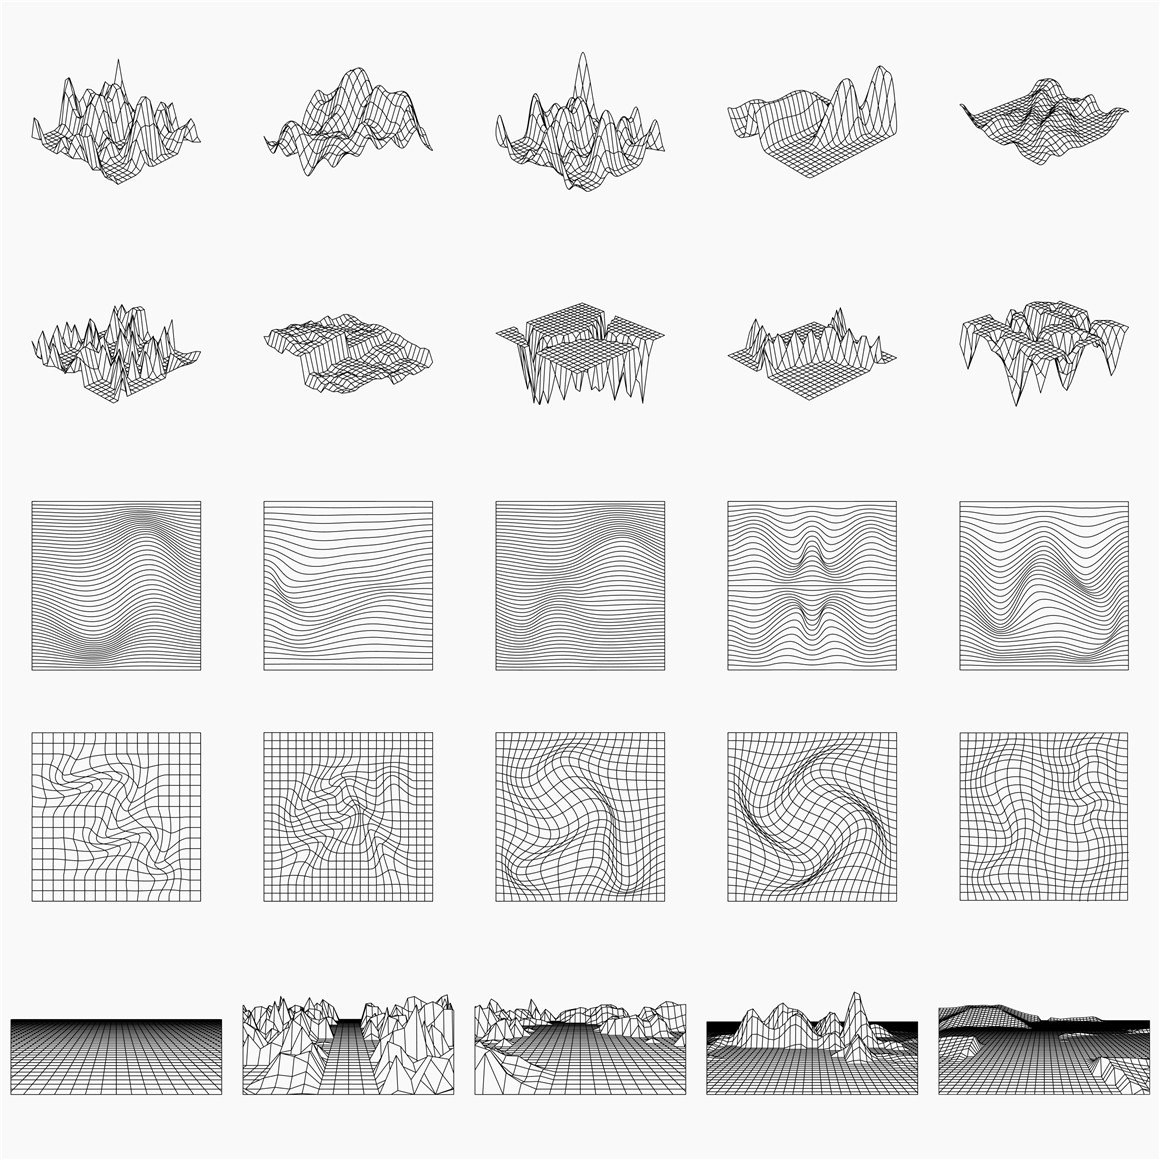 LS.GRAPHICS 350多款未来赛博朋克科幻酸性点线面3d立体几何构成抽象机能图形设计素材 350+ Abstract Contours Shapes 图片素材 第17张